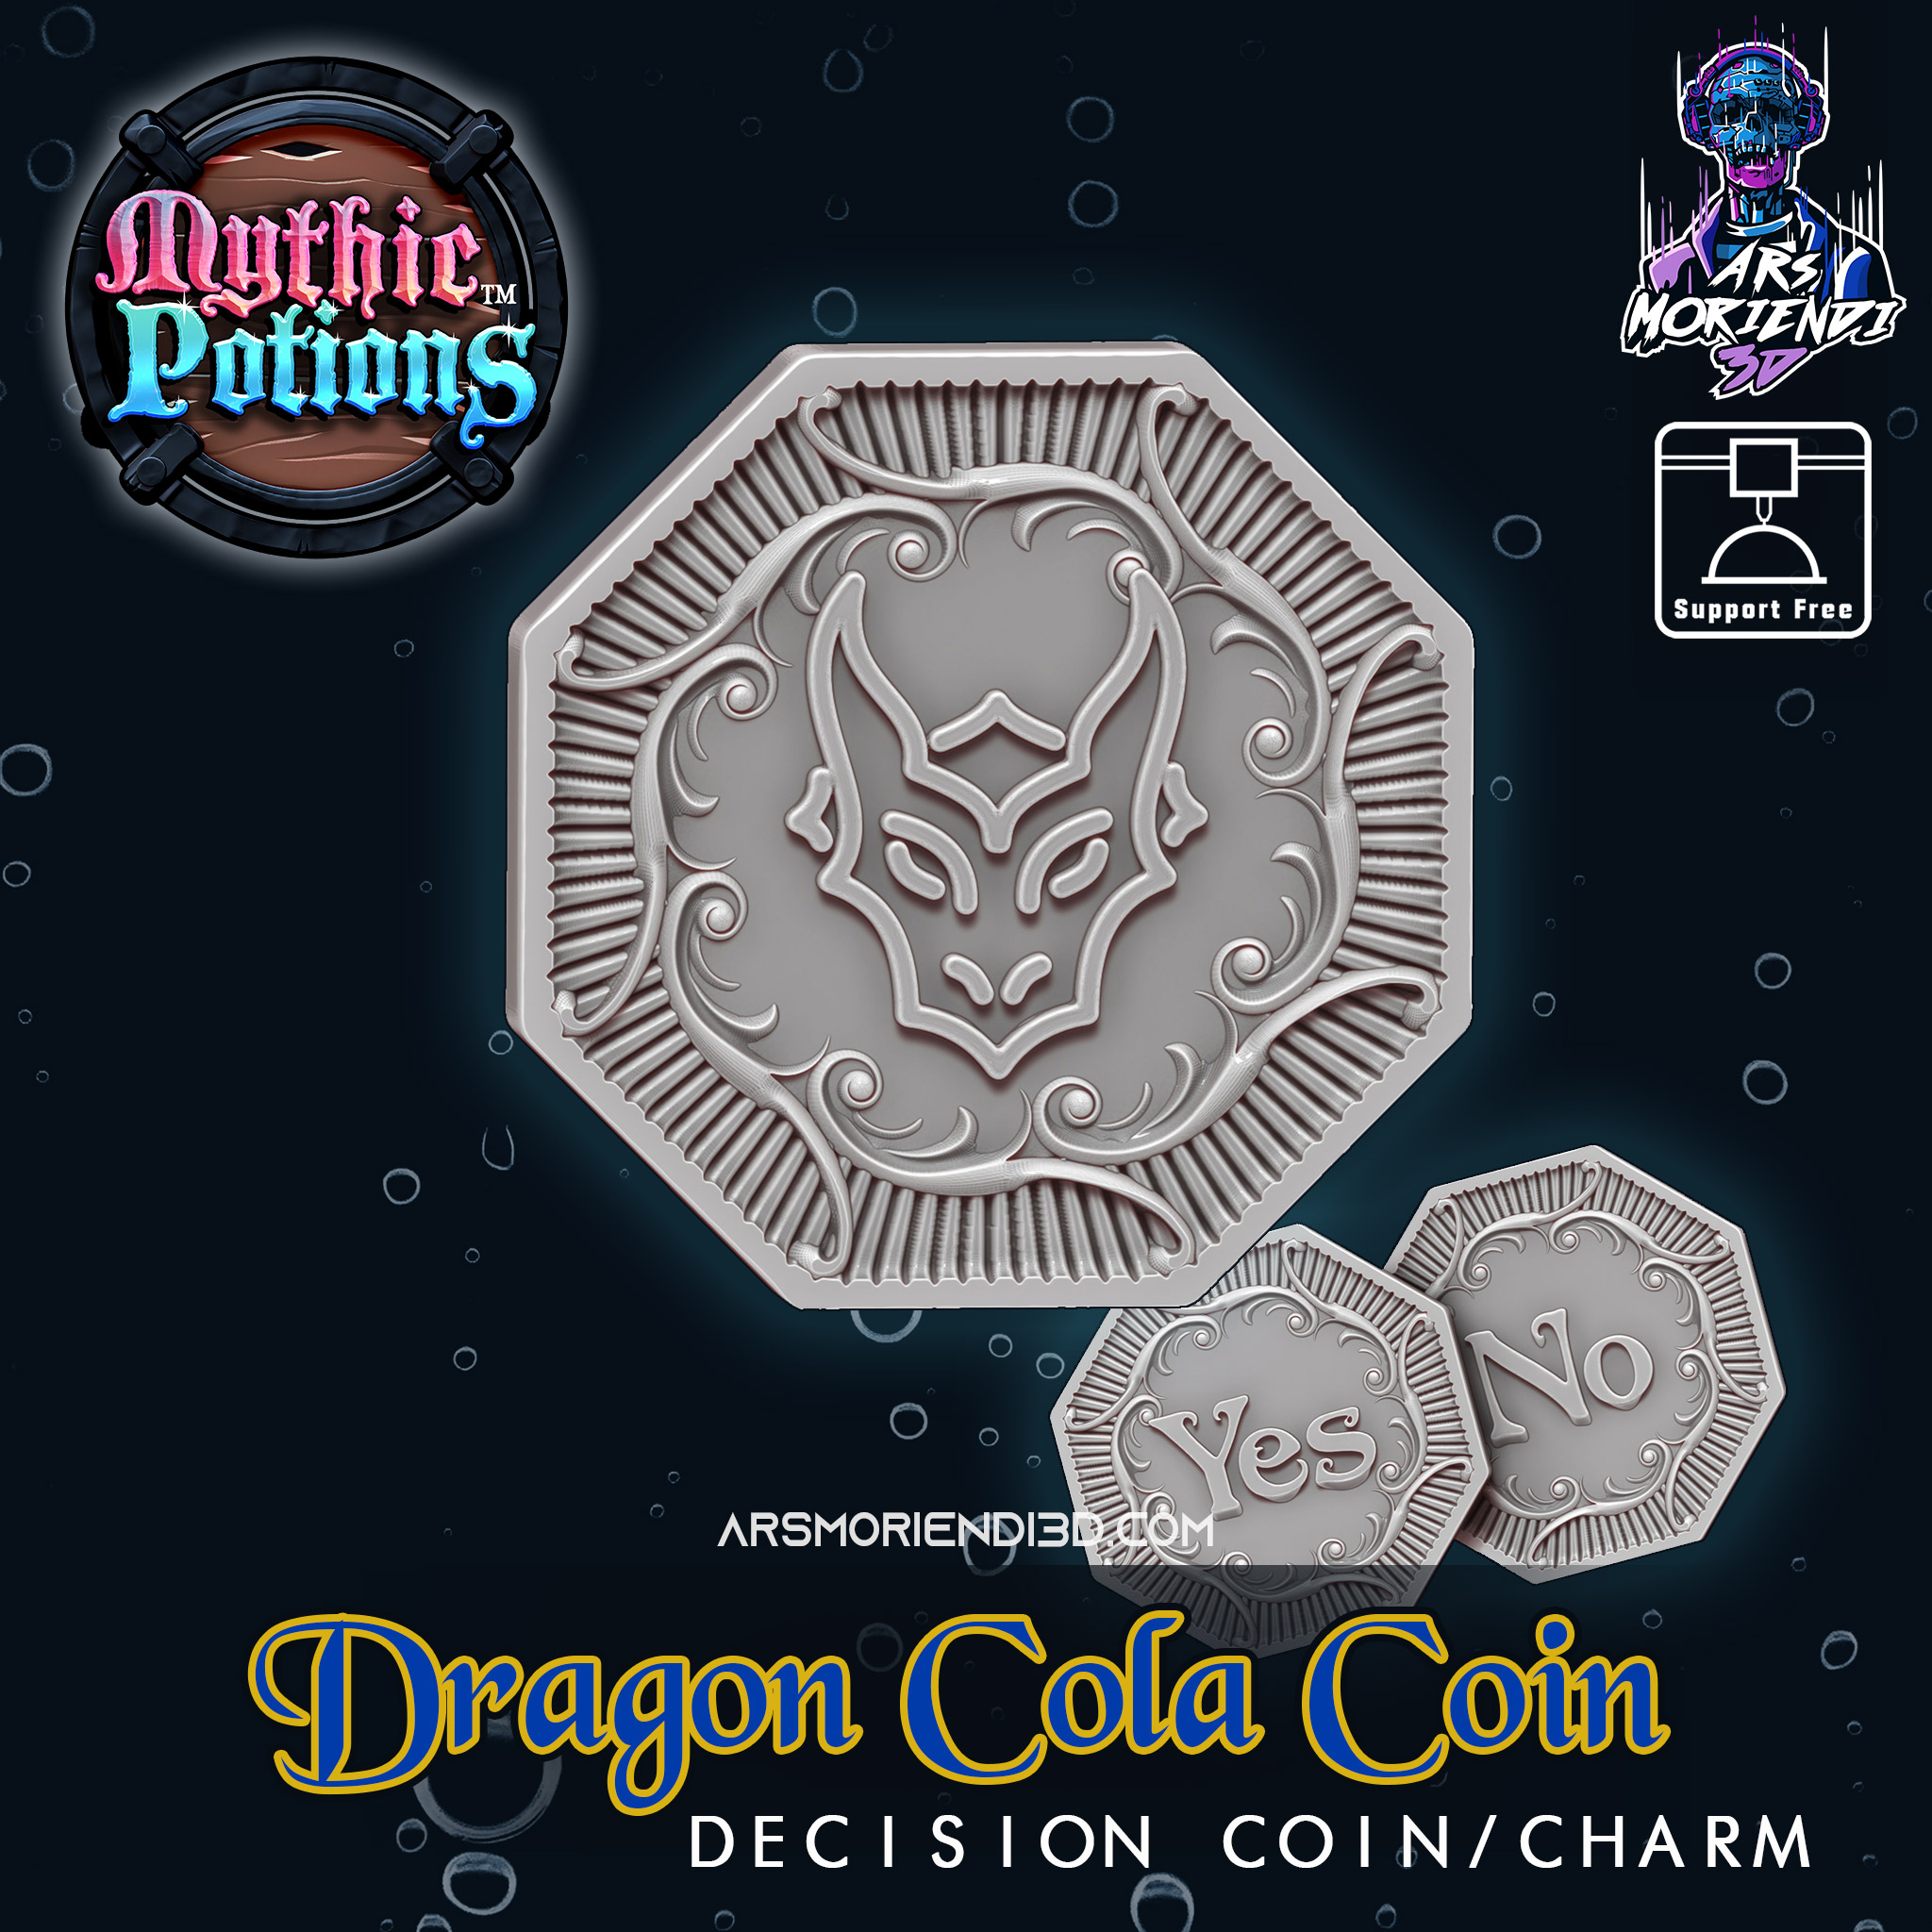 Dragon Cola Decision Coin / Charm